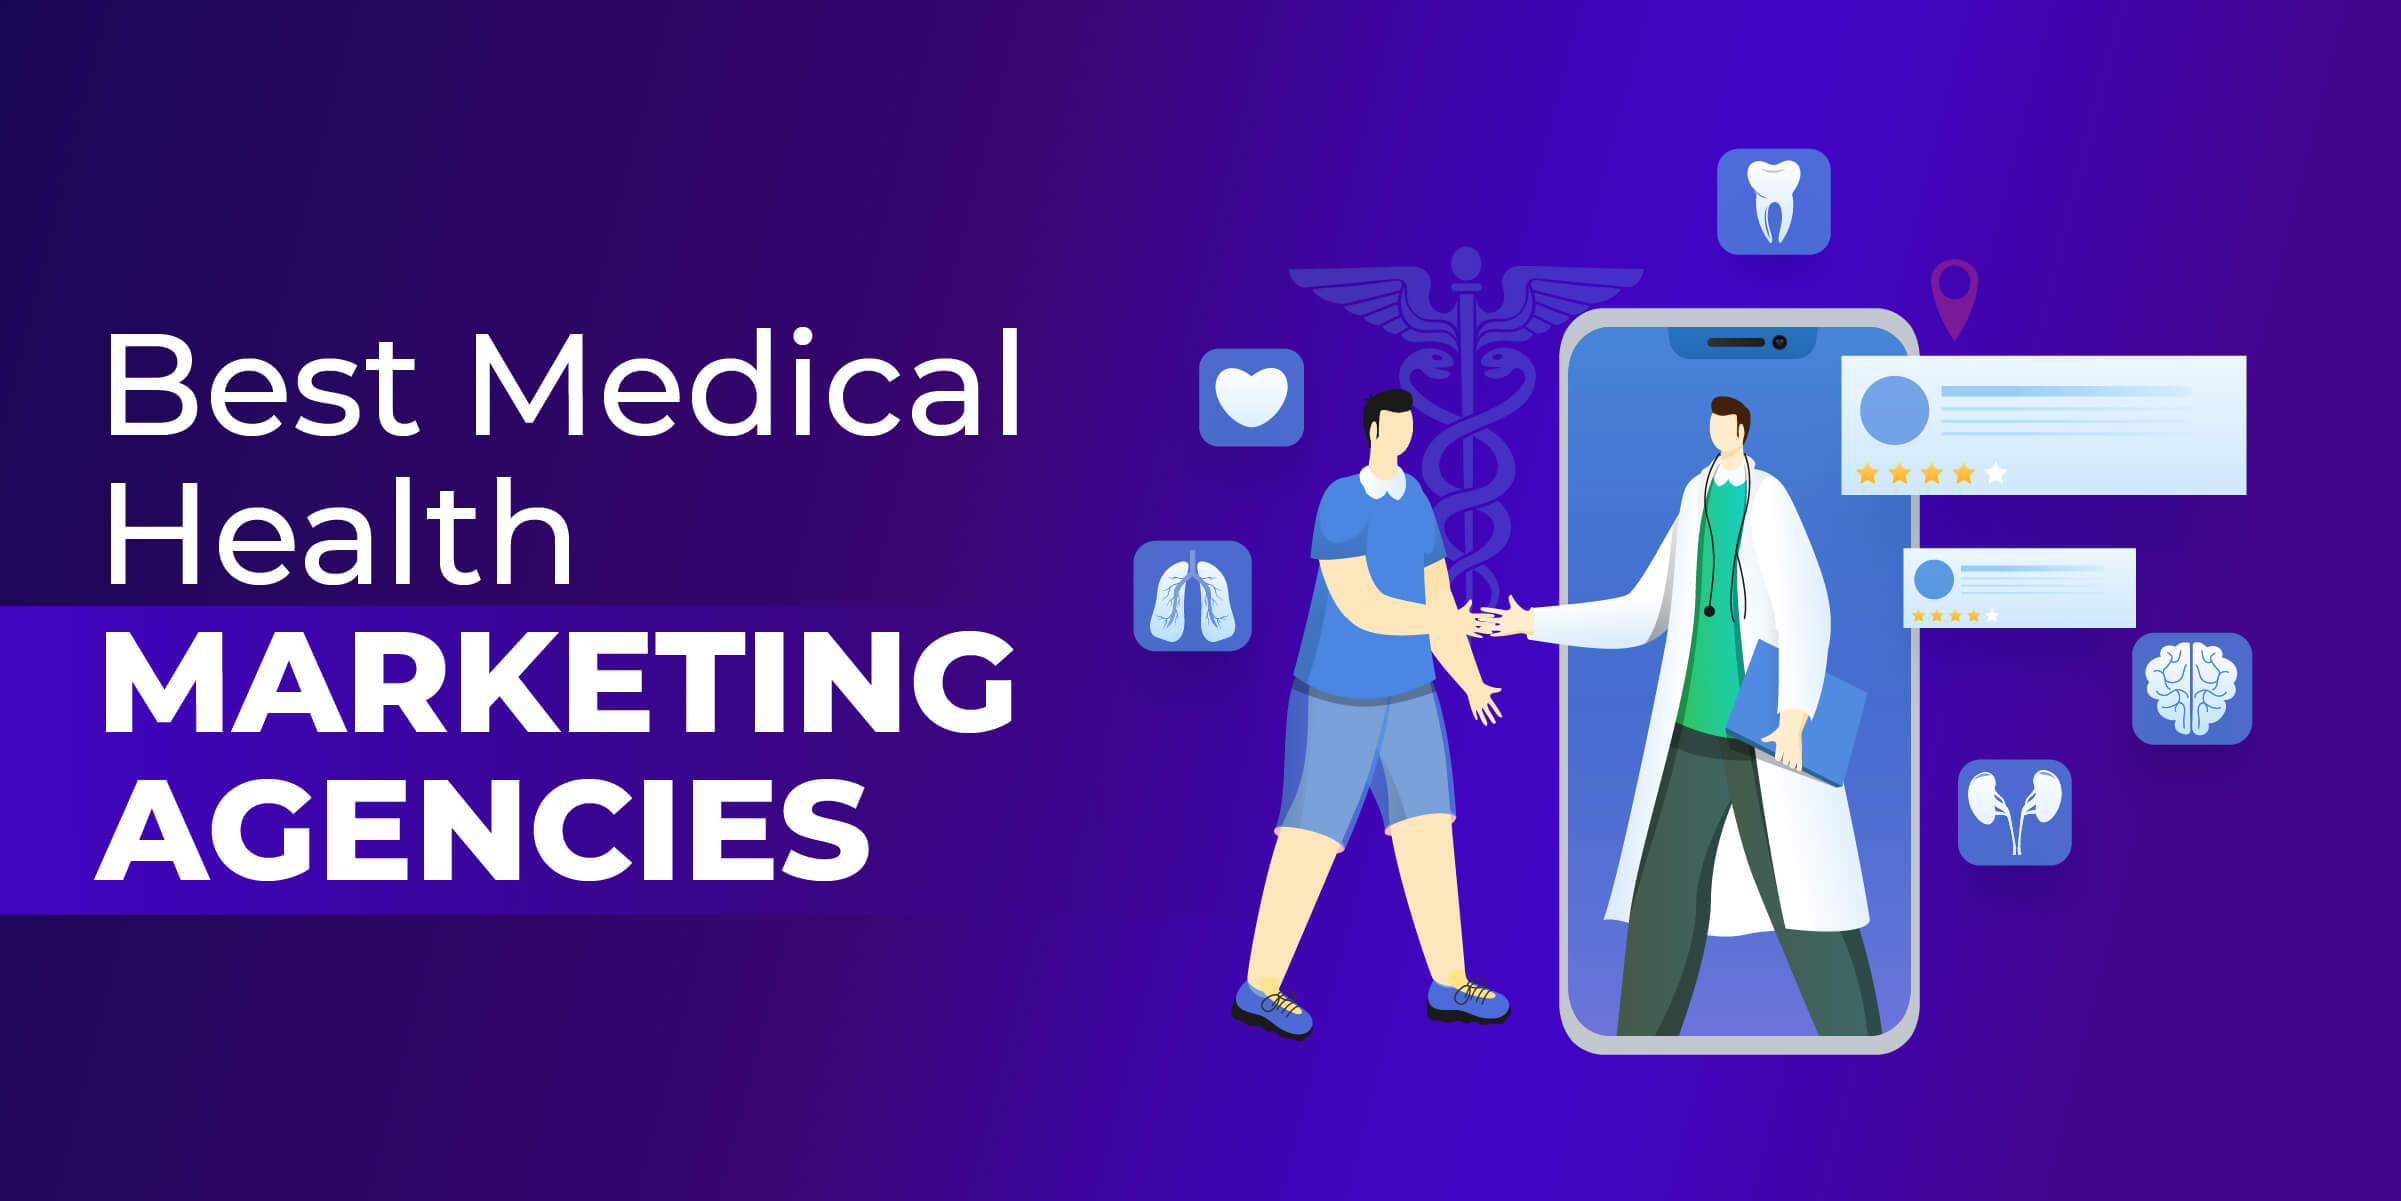 Best Medical Health Marketing Agencies